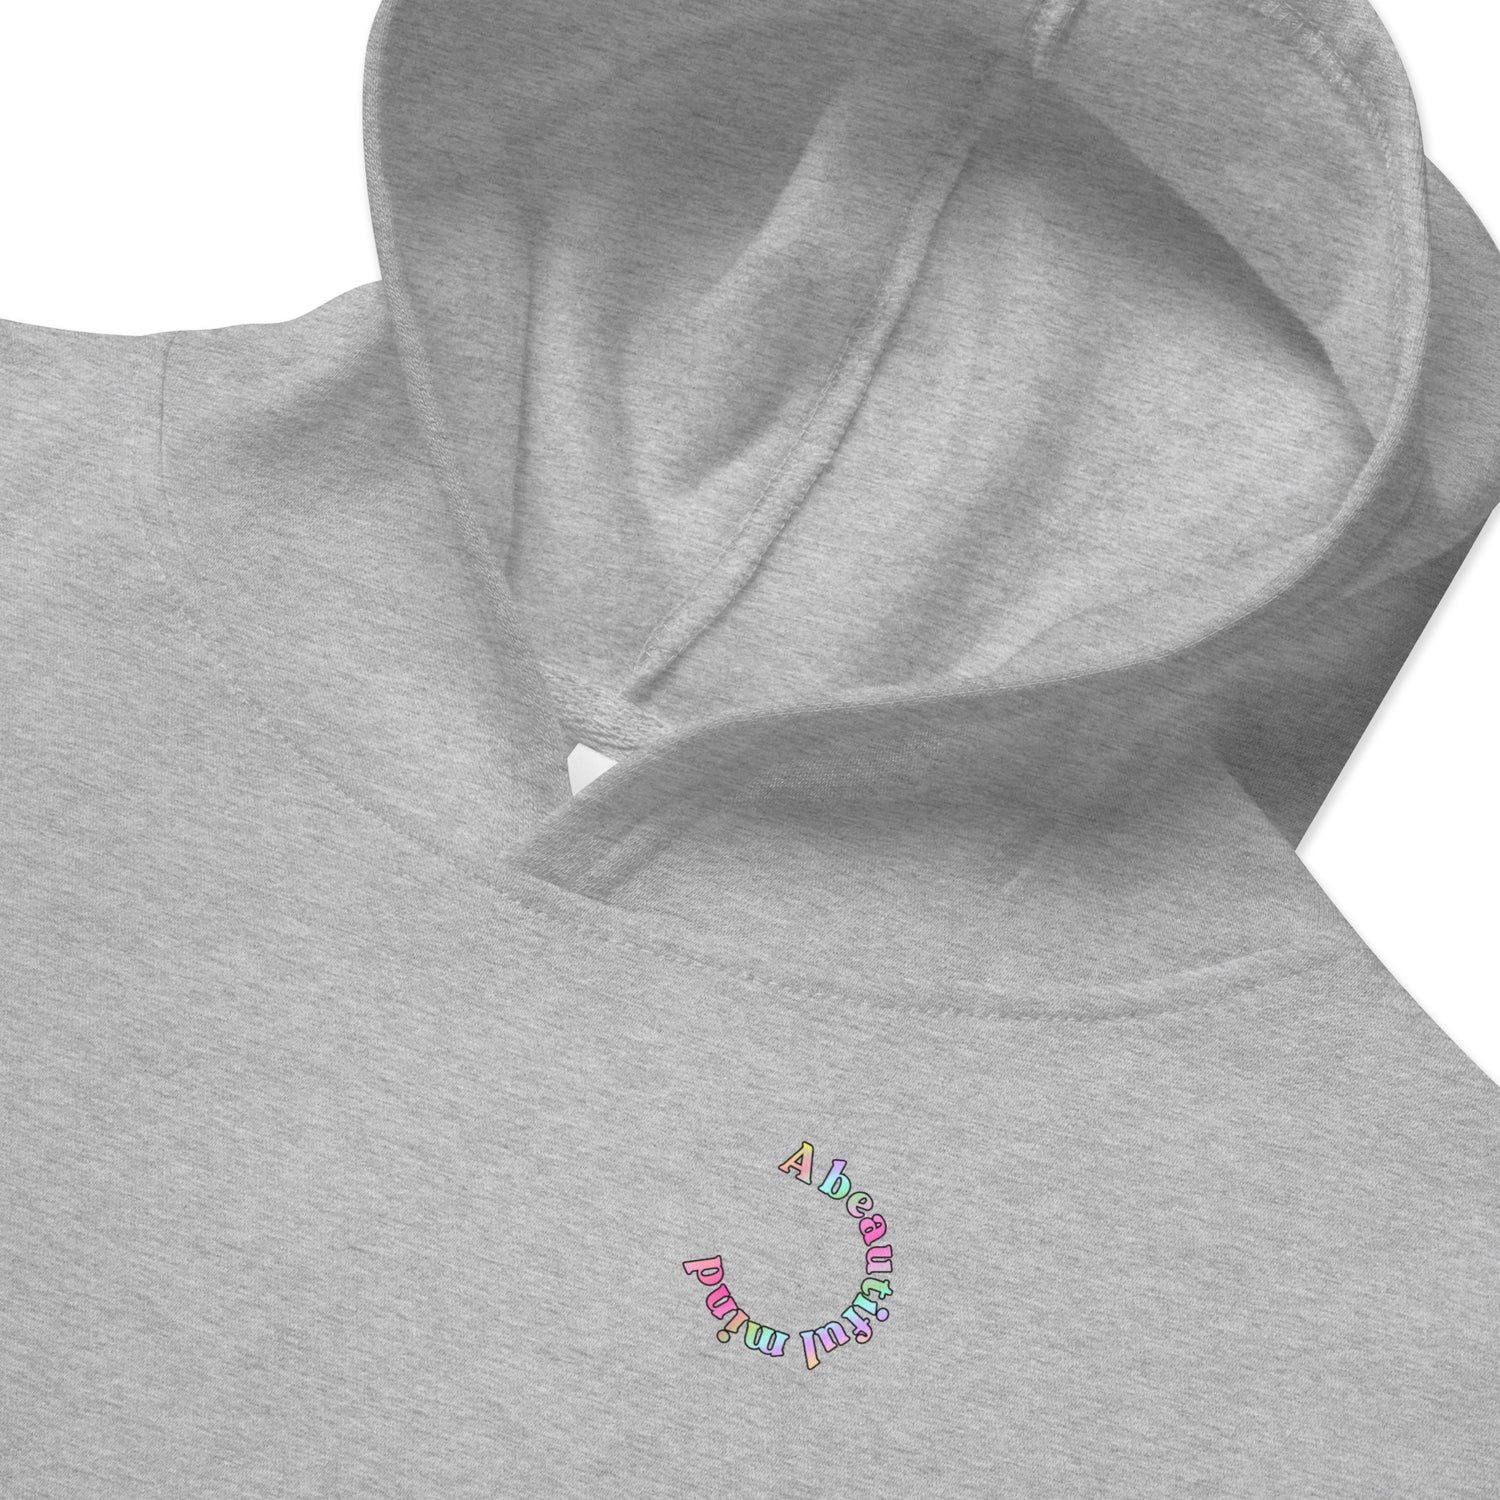 Closeup of Grey Kidswear Hoodie featuring "A beautiful mind" printed.